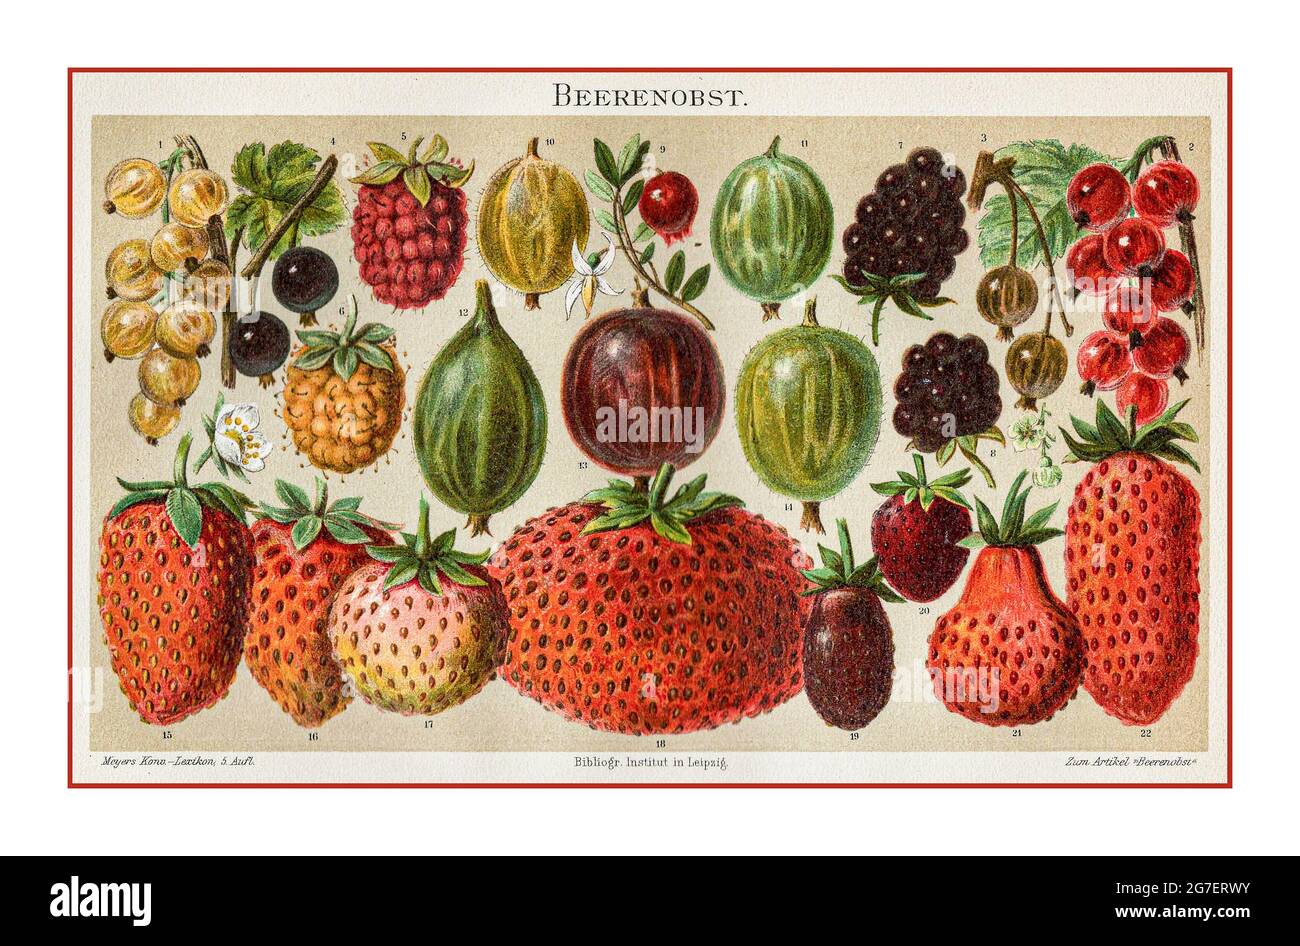 BEEREN JAHRGANG ‘BEERENOBST’ LITHOGRAPHIE 1800 ILLUSTRATION GARTEN FRÜCHTE Jahrgang Botanik, Beeren, verschiedene Sorten, 1-4 Johannisbeere (Ribes), 5-6 Himbeere (Rubus idaeus), 6-8 Brombeere (Rubus fruticosus), 9 Preiselbeere (Vaccinium oxyccosus), 10-14 Stachelbeere (Ribes uva-crispa), 15-22 Erdbeere (Fragaria), Farblithographie, von Meyer, um 1880 Stockfoto